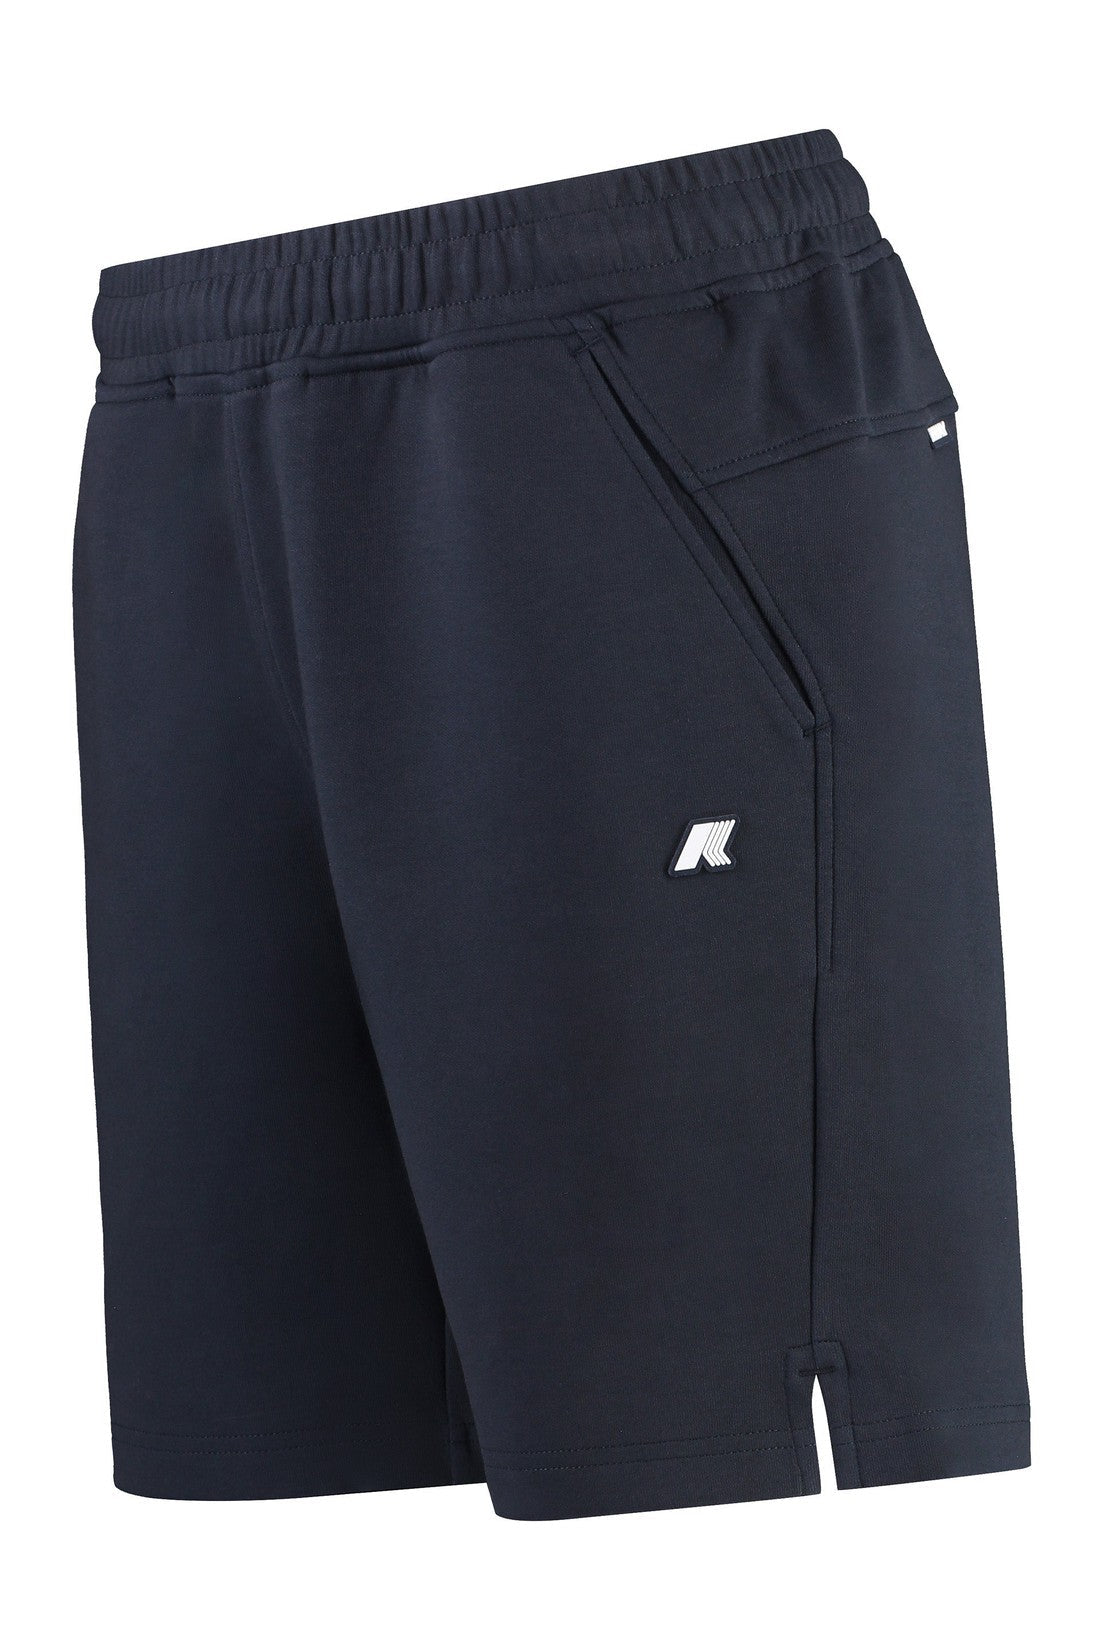 K-Way-OUTLET-SALE-Keny Cotton bermuda shorts-ARCHIVIST